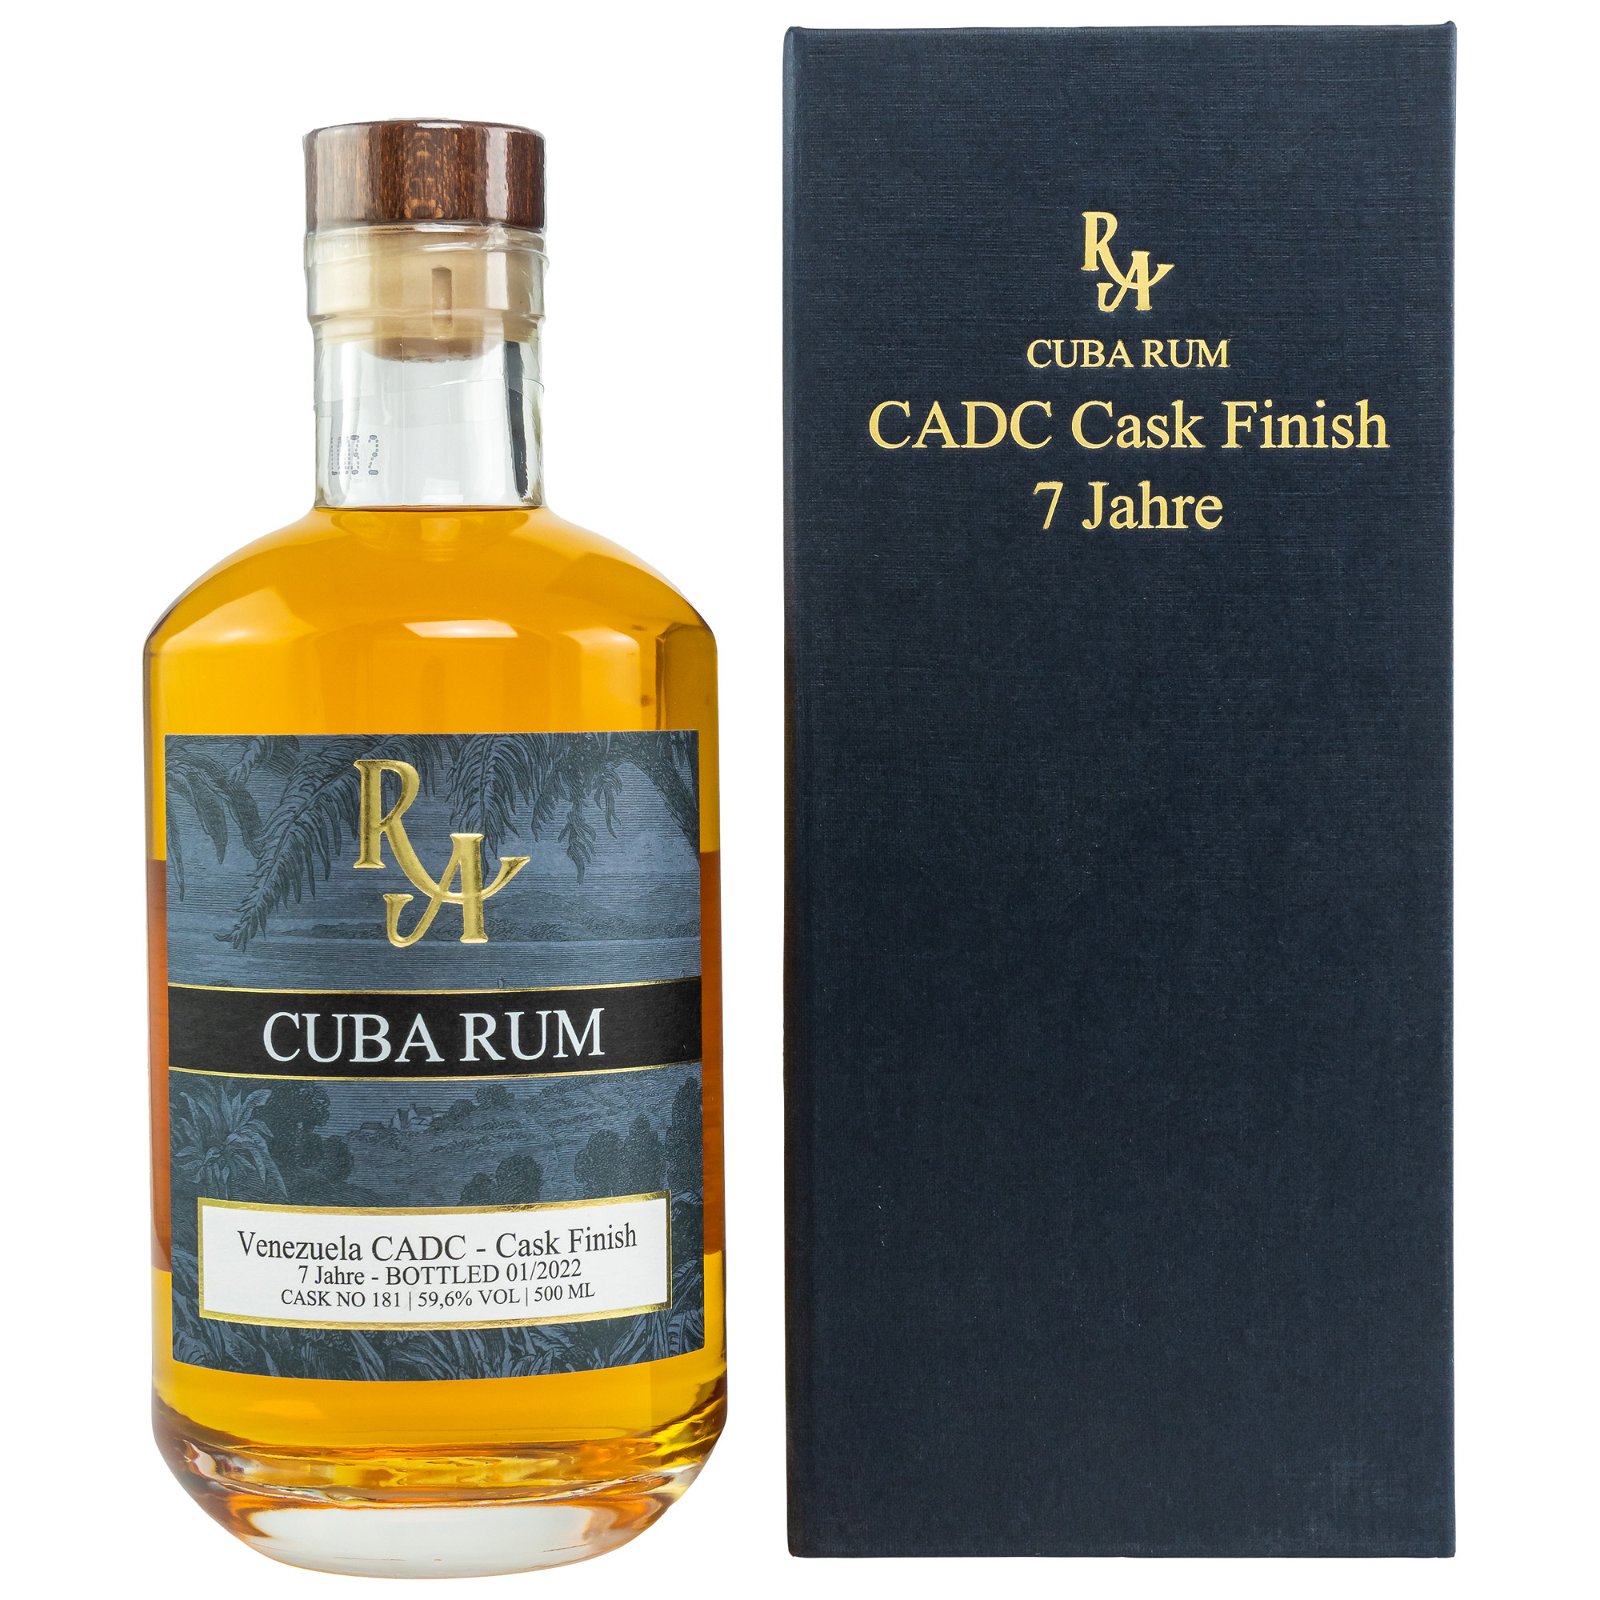 Rum Artesanal 7 Jahre Cuba Rum CADC Cask Finish No. 181